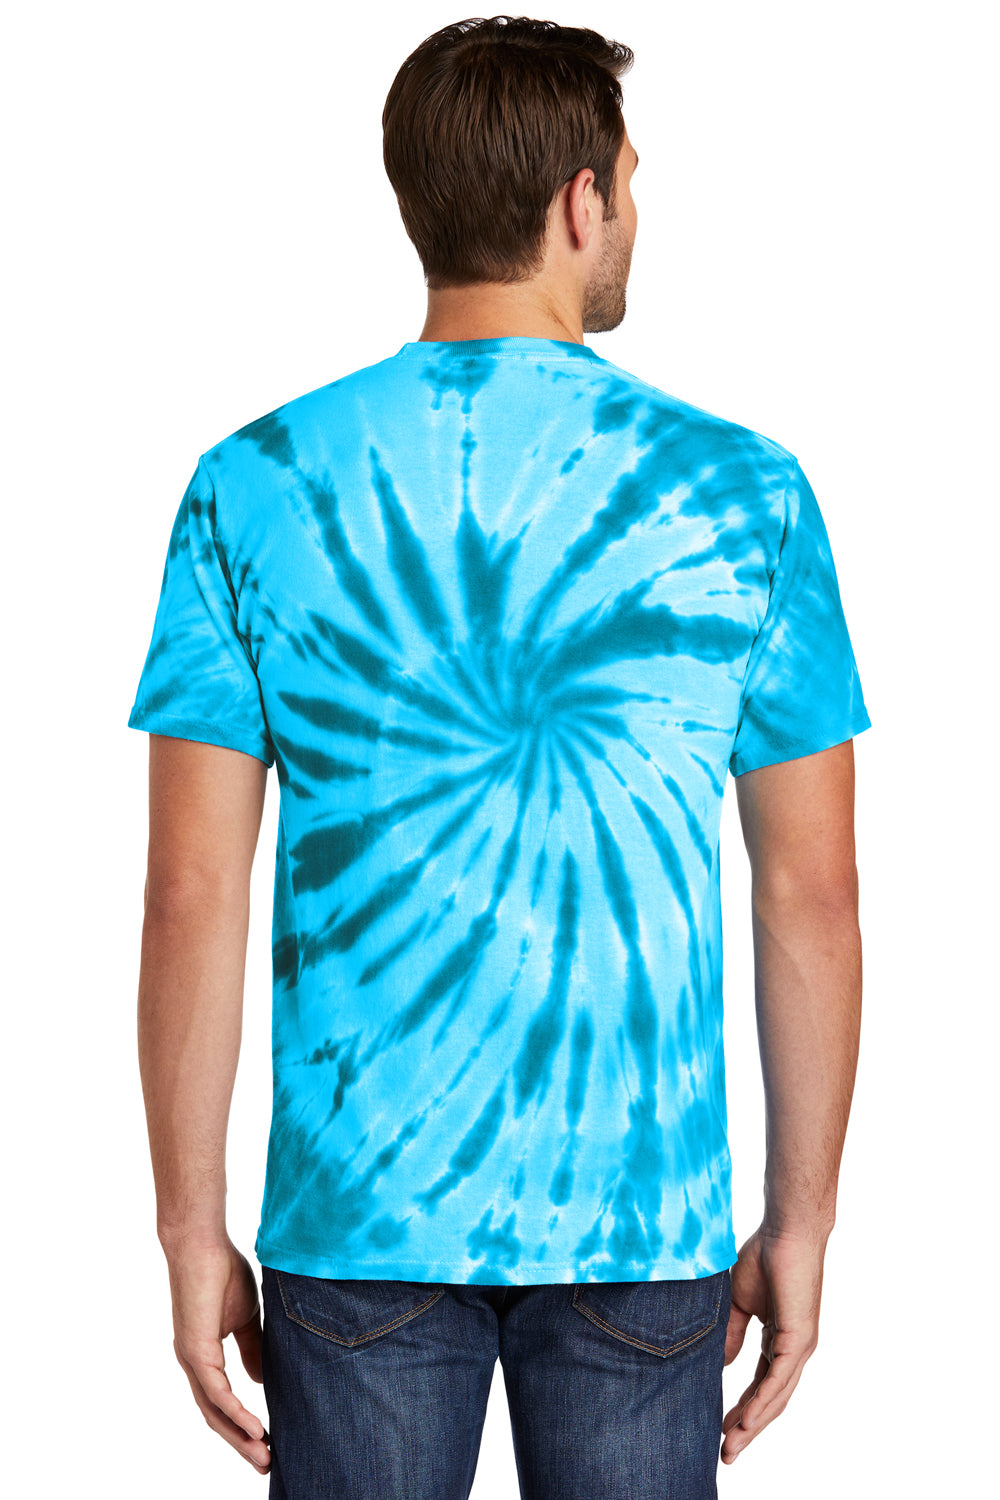 Port & Company PC147 Mens Tie-Dye Short Sleeve Crewneck T-Shirt Turquoise Blue Back